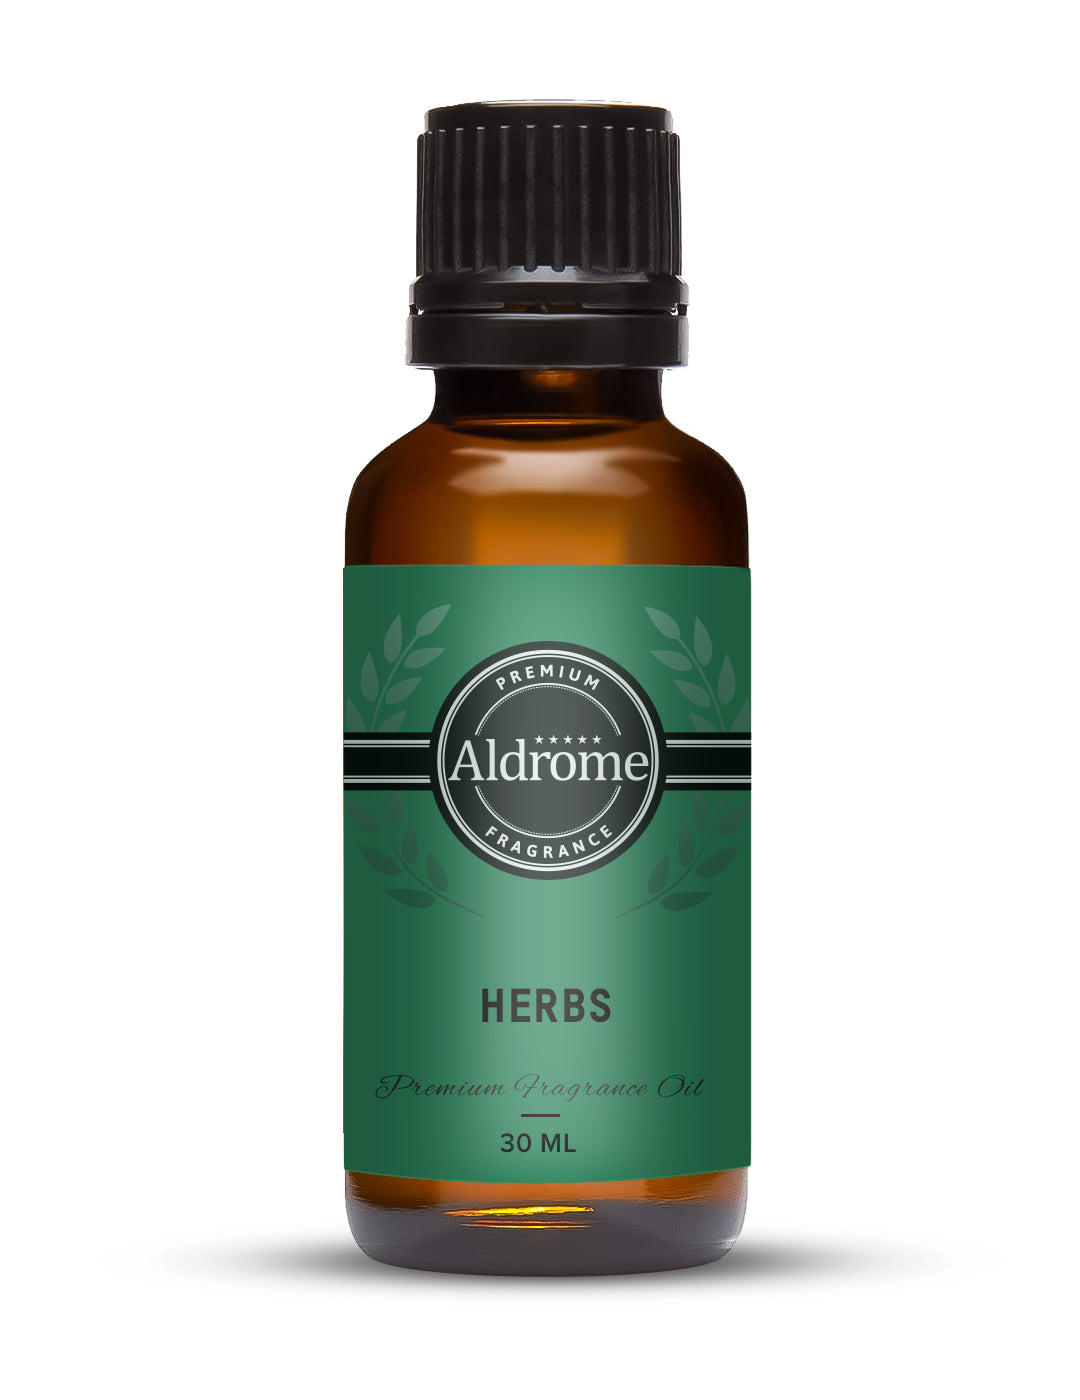 Herbs Fragrance Oil - 30ml | Buy Herbs Fragrance Oil | Aldrome Premium Fragrance Oil